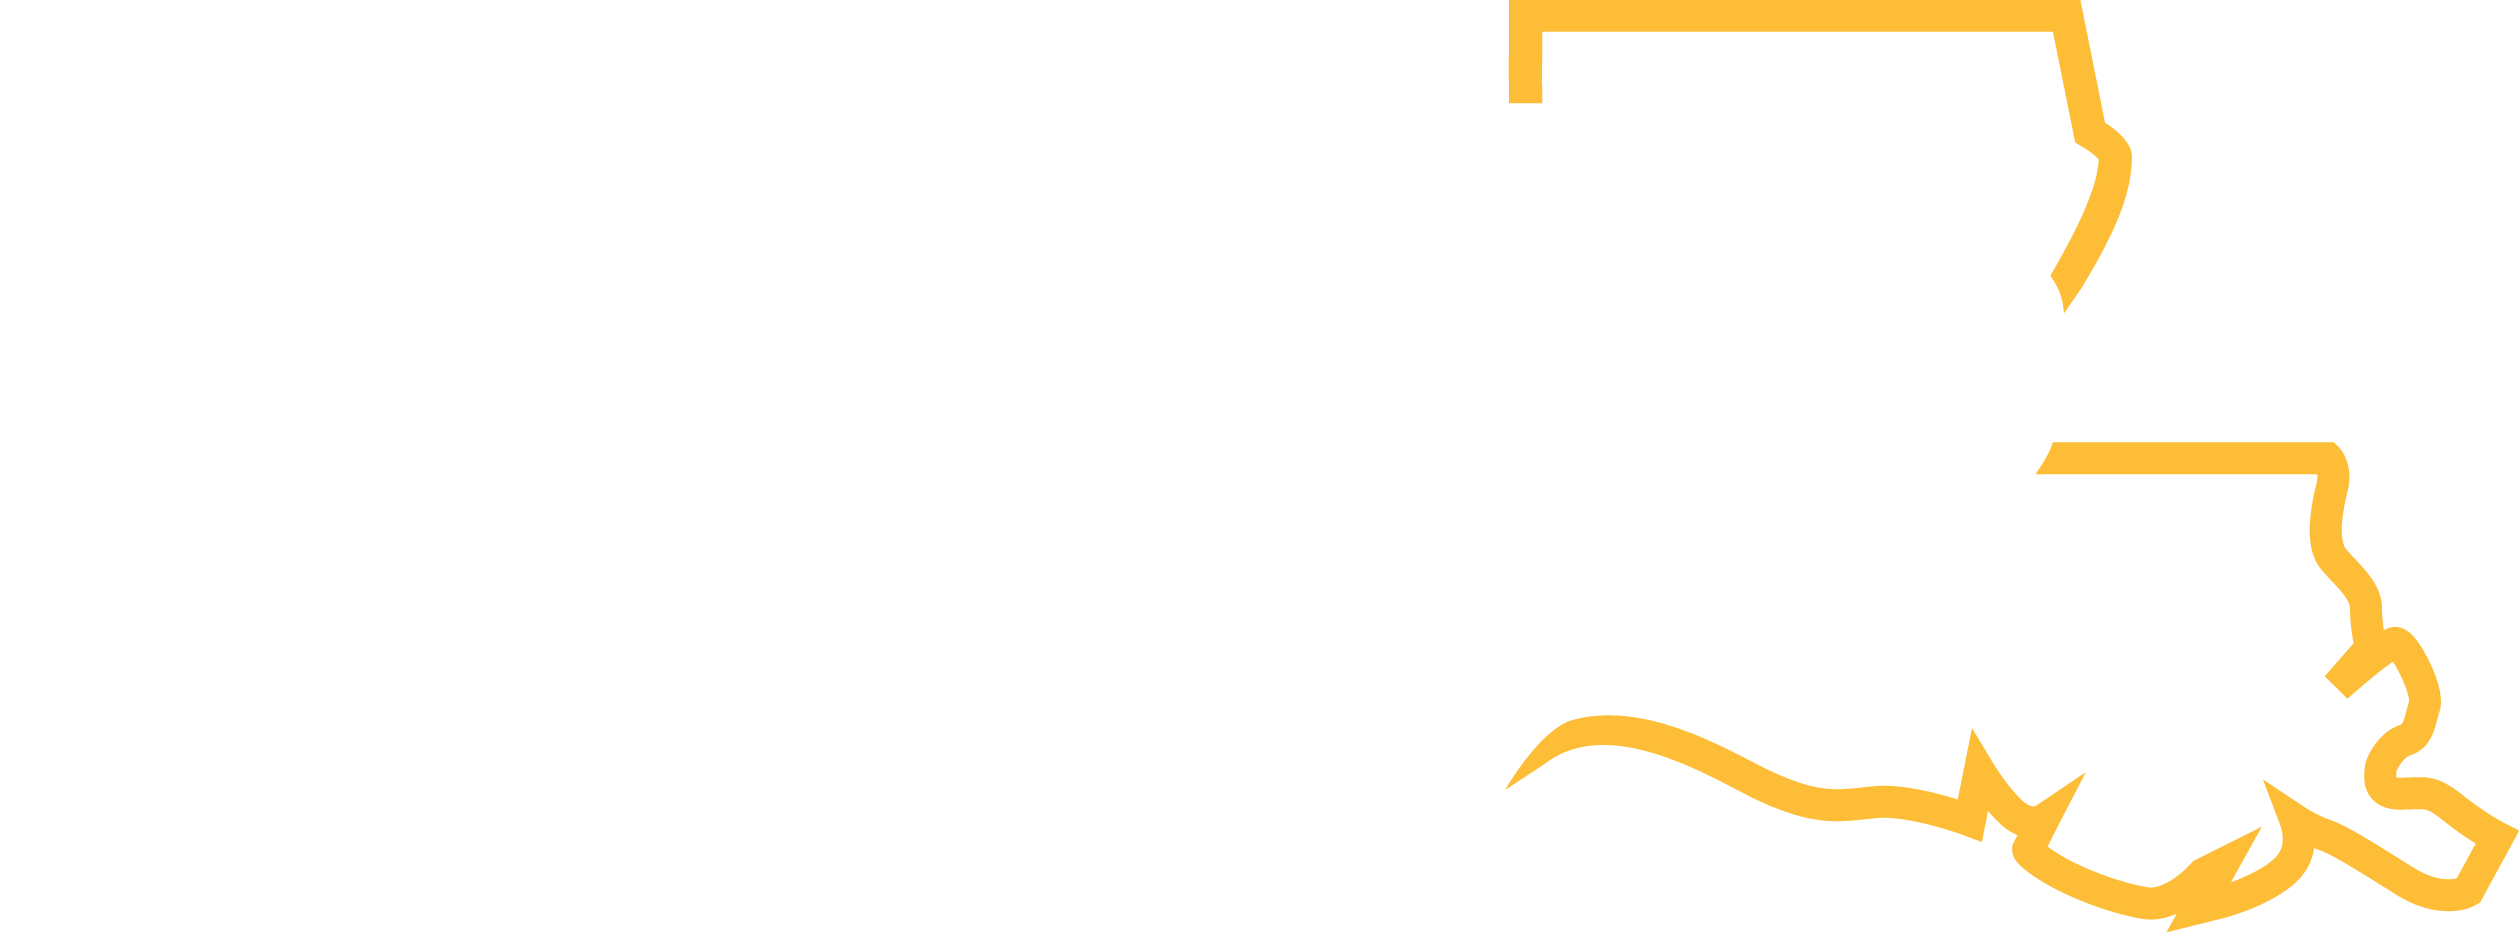 Governor's Office of Homeland Security & Emergency Preparedness